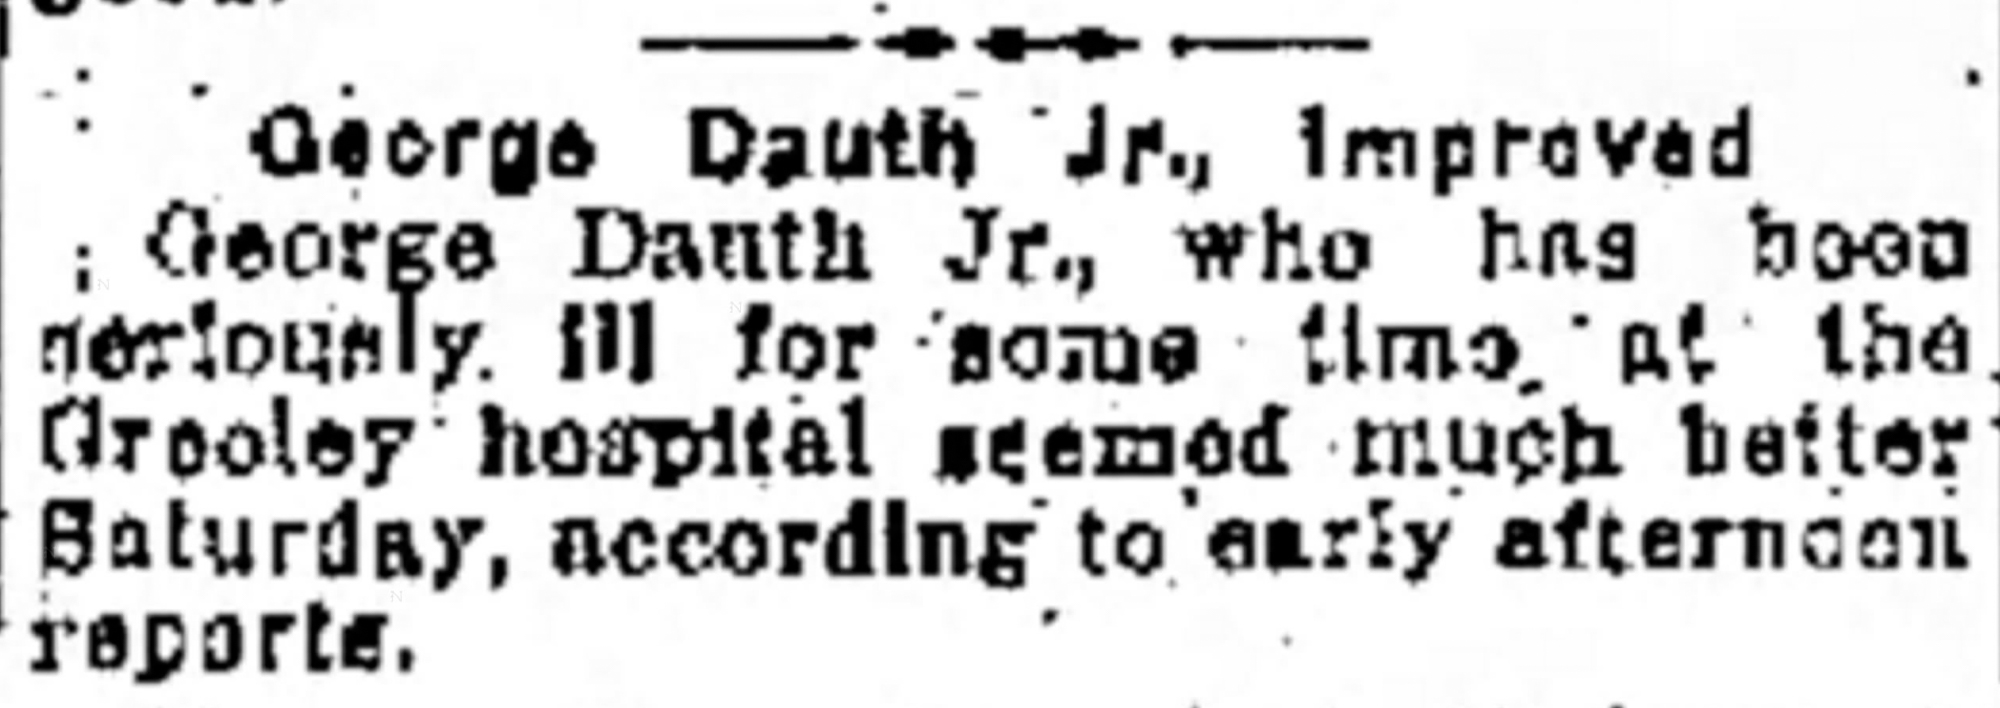 Dauth Family Archive - 1932-05-07 - Greeley Daily Tribune - June Dauth Improving